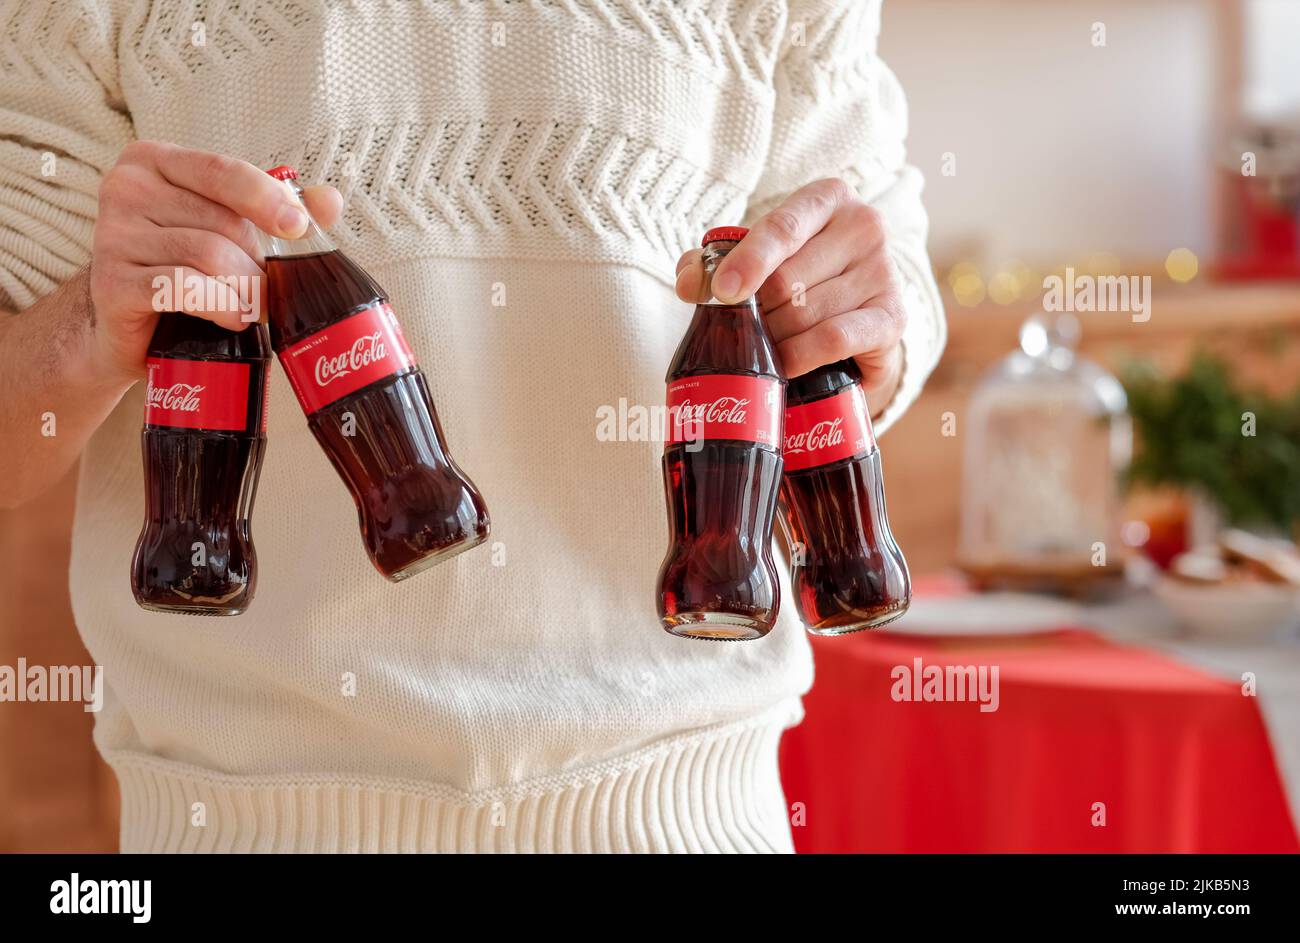 https://c8.alamy.com/comp/2JKB5N3/coca-cola-glass-bottles-christmas-party-2JKB5N3.jpg